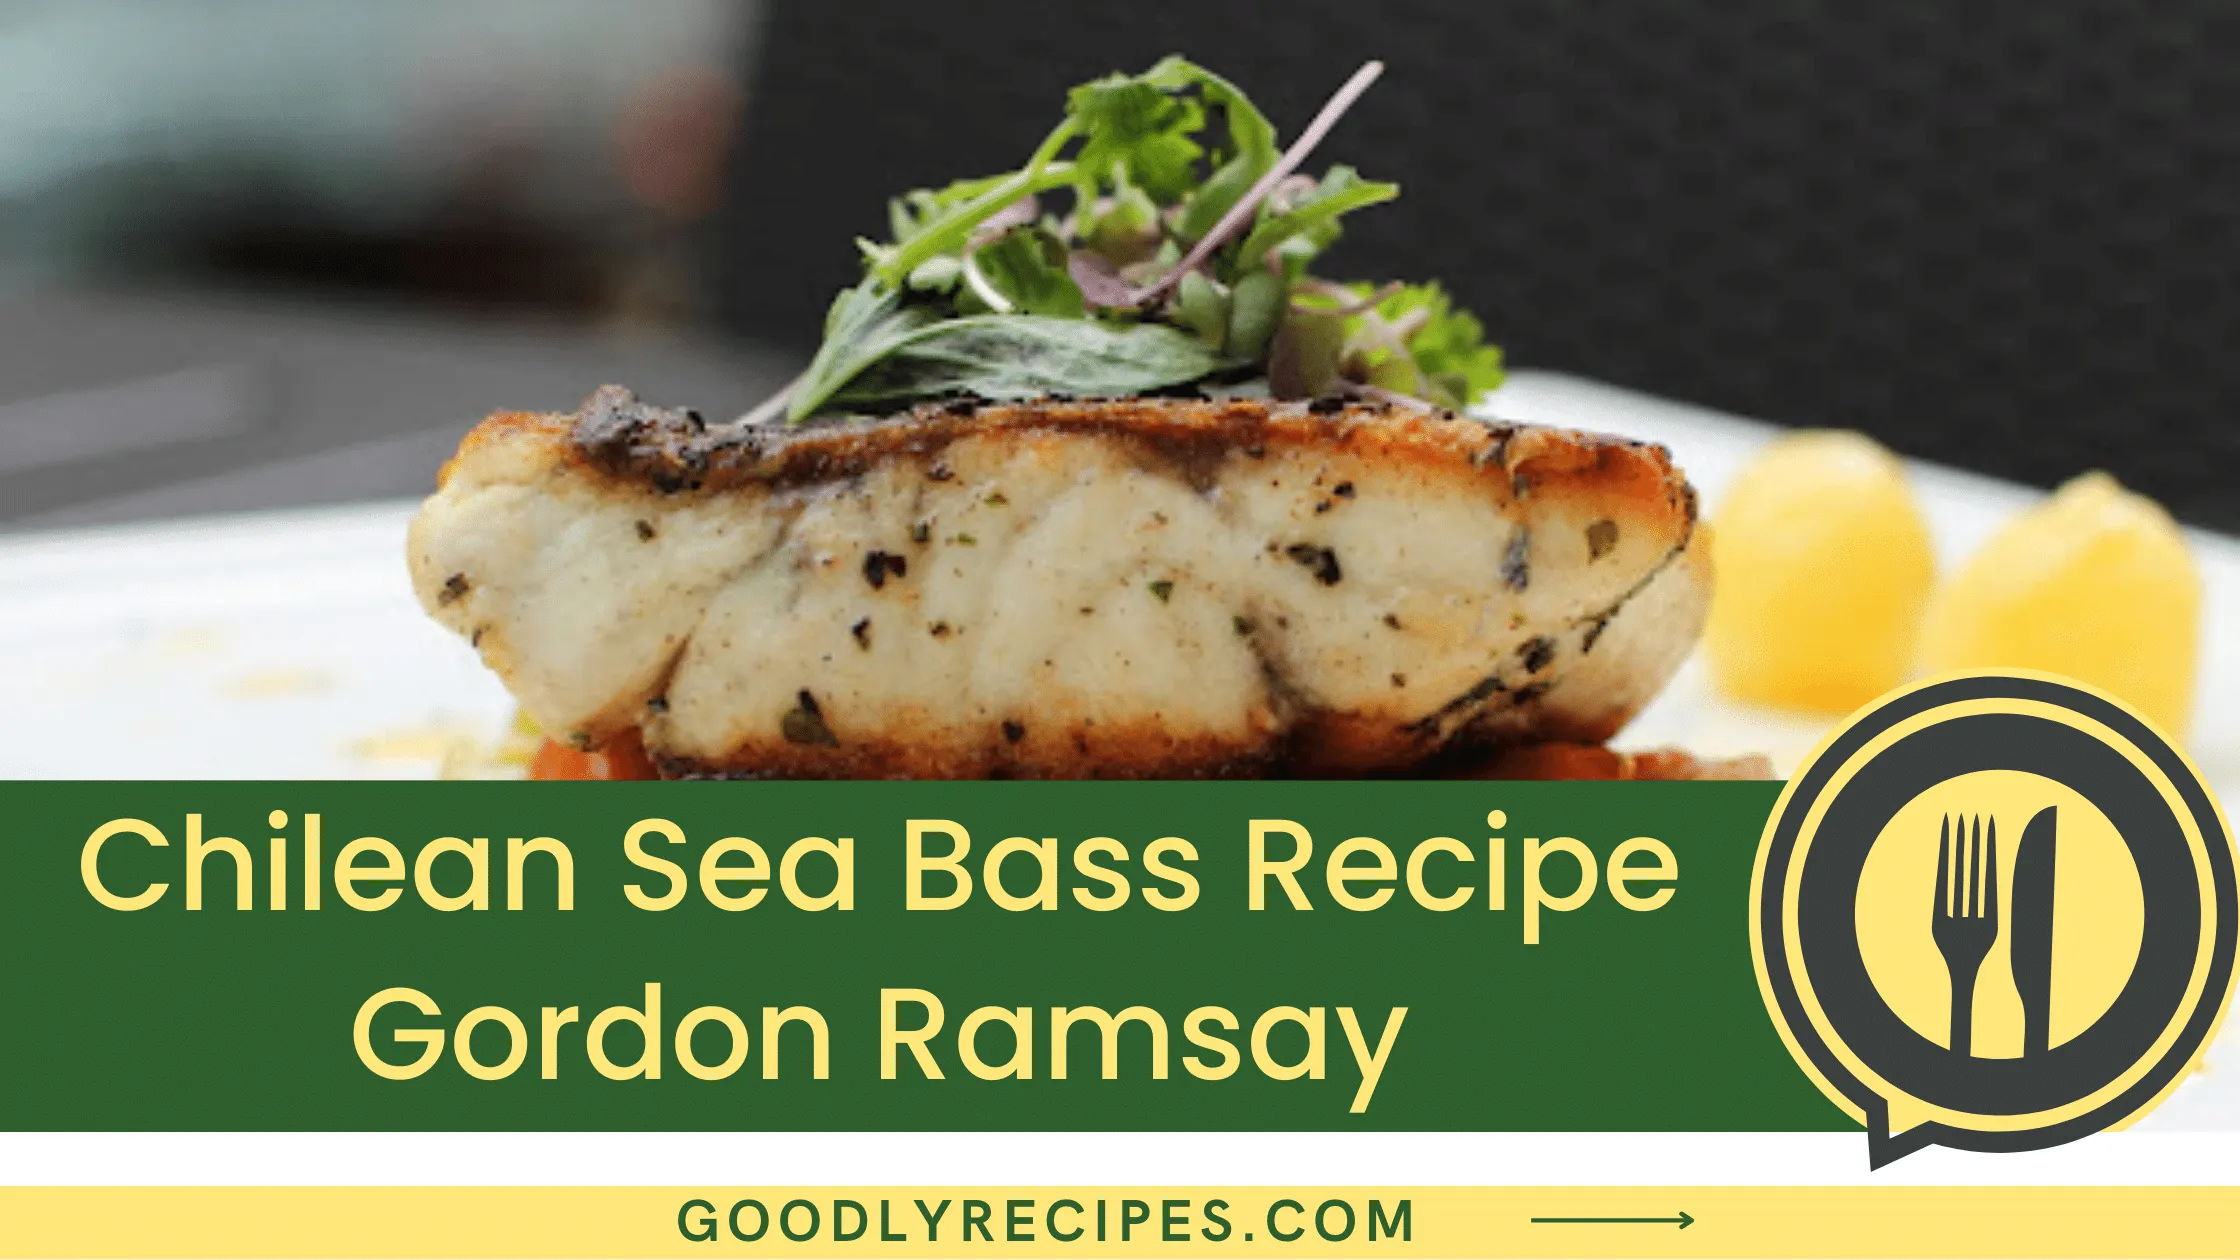 What Is Chilean Sea Bass Gordon Ramsay?